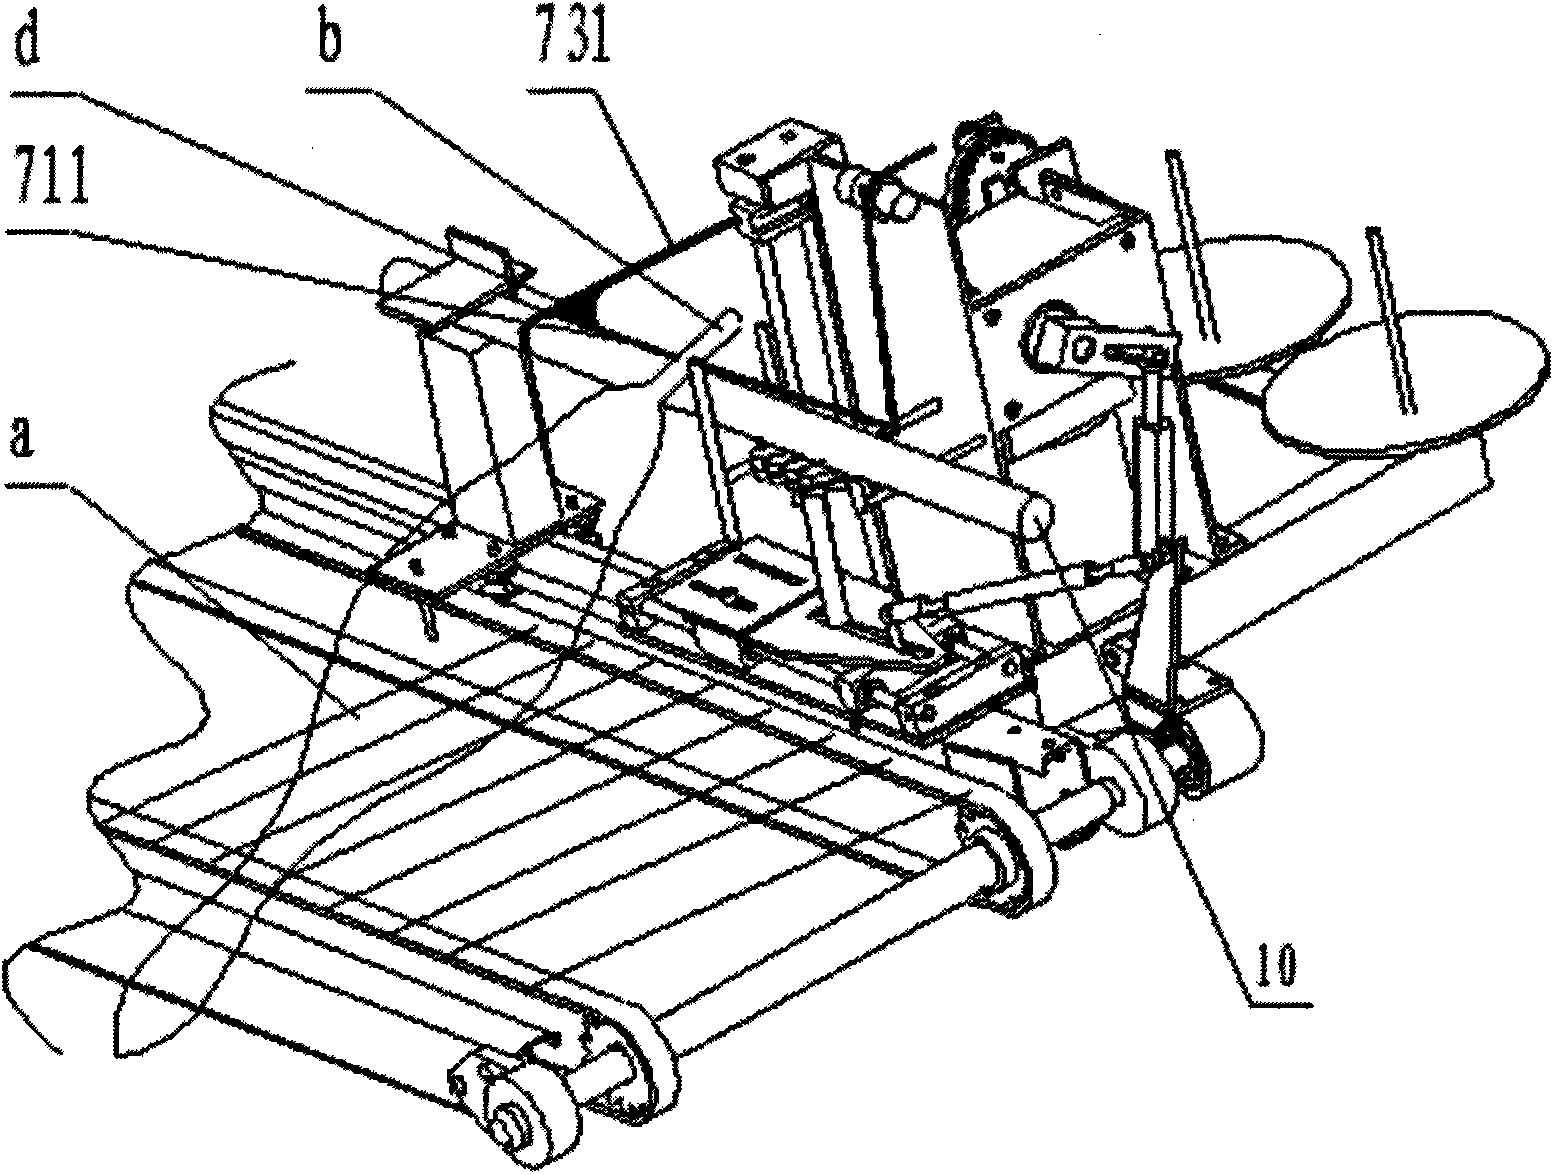 Semiautomatic tobacco-weaving machine